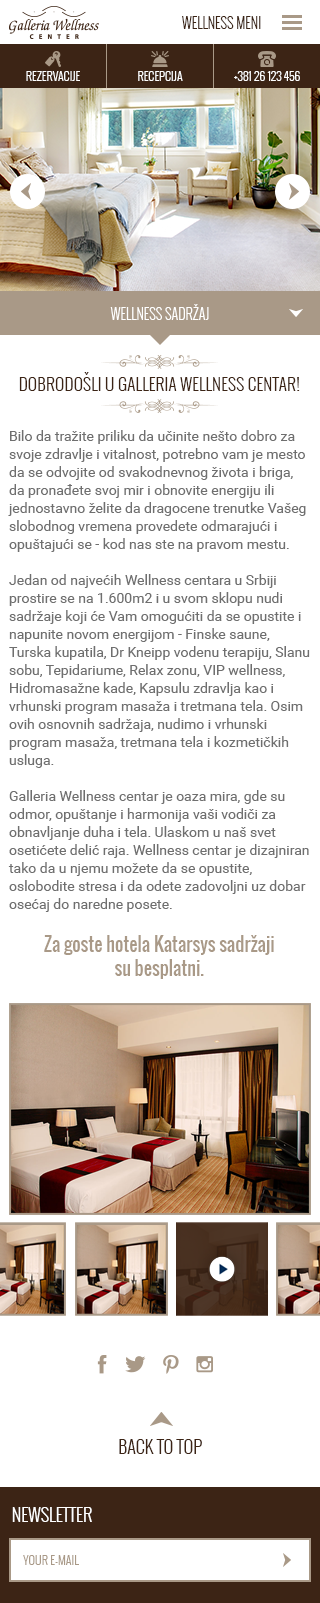 hotel Wellness galleria Spa website hotel